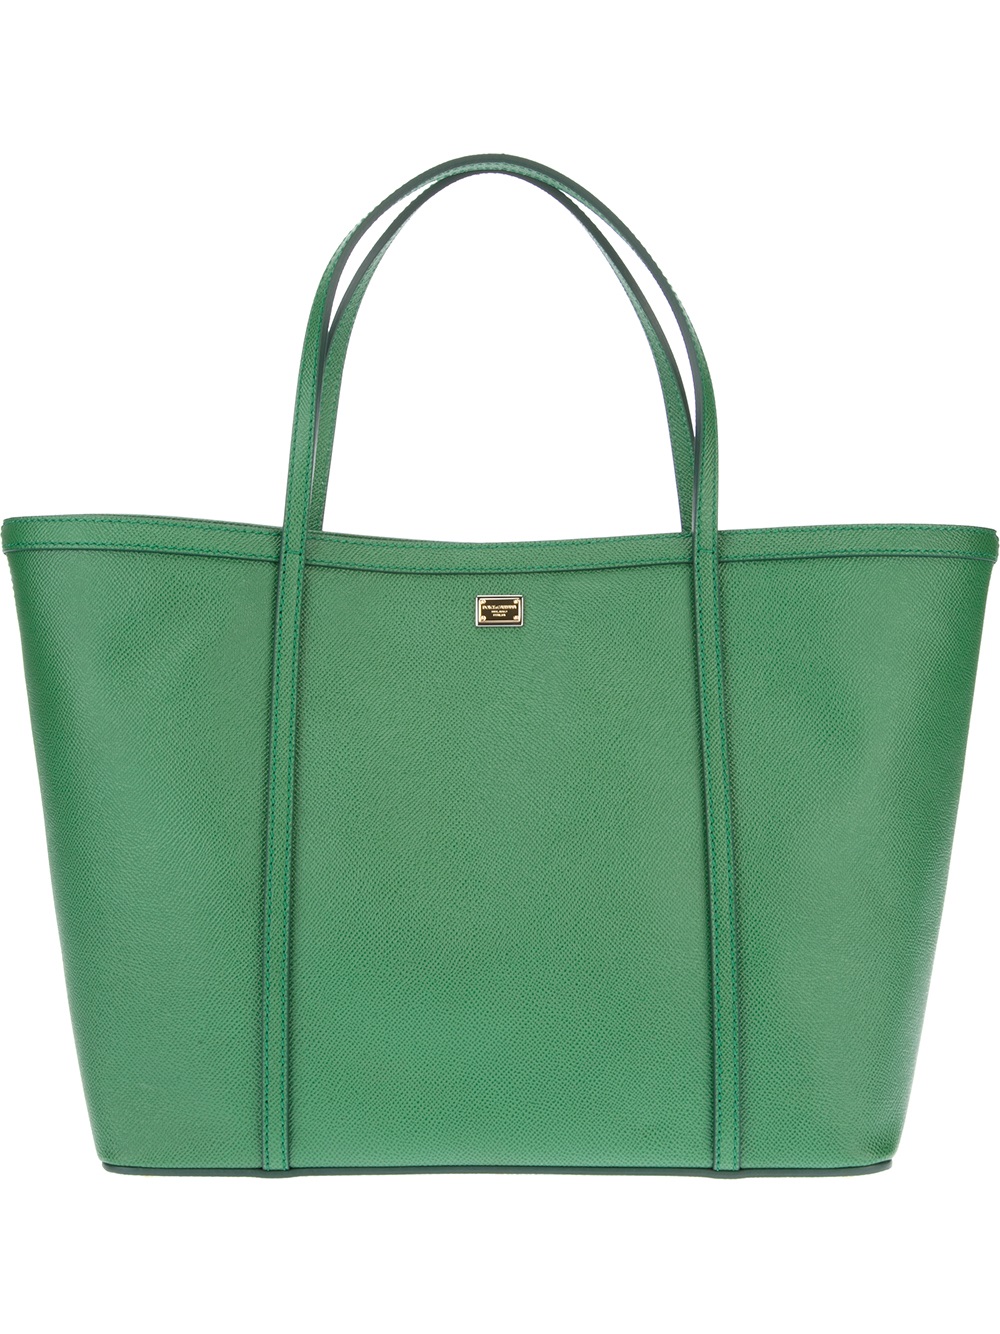 Dolce & Gabbana Tote Bag in Green | Lyst